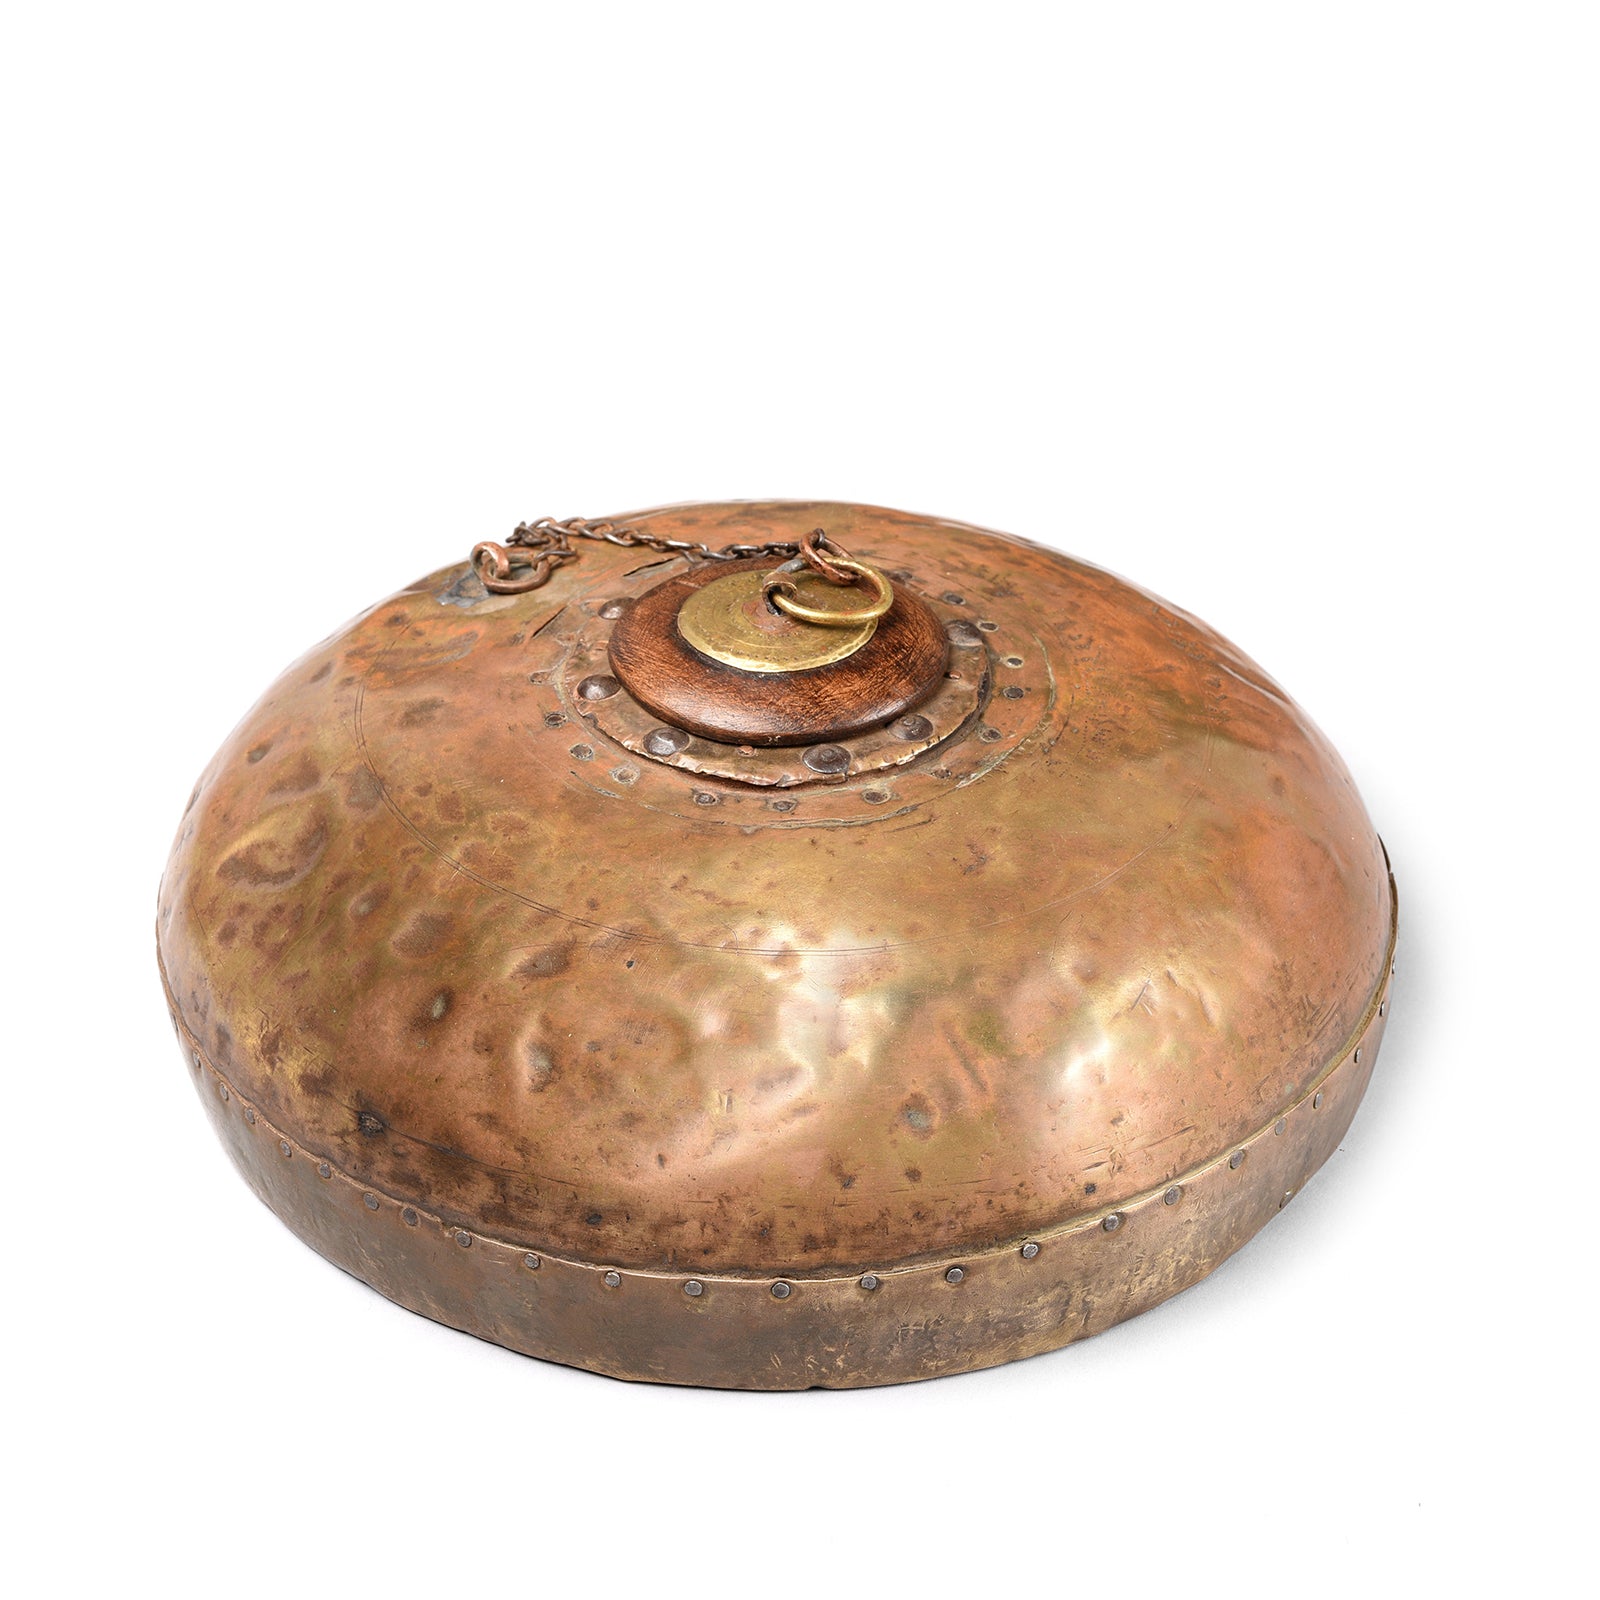 Brass & Teak Indian Tobacco Pot From Rajasthan - 19thC | Indigo Antiques